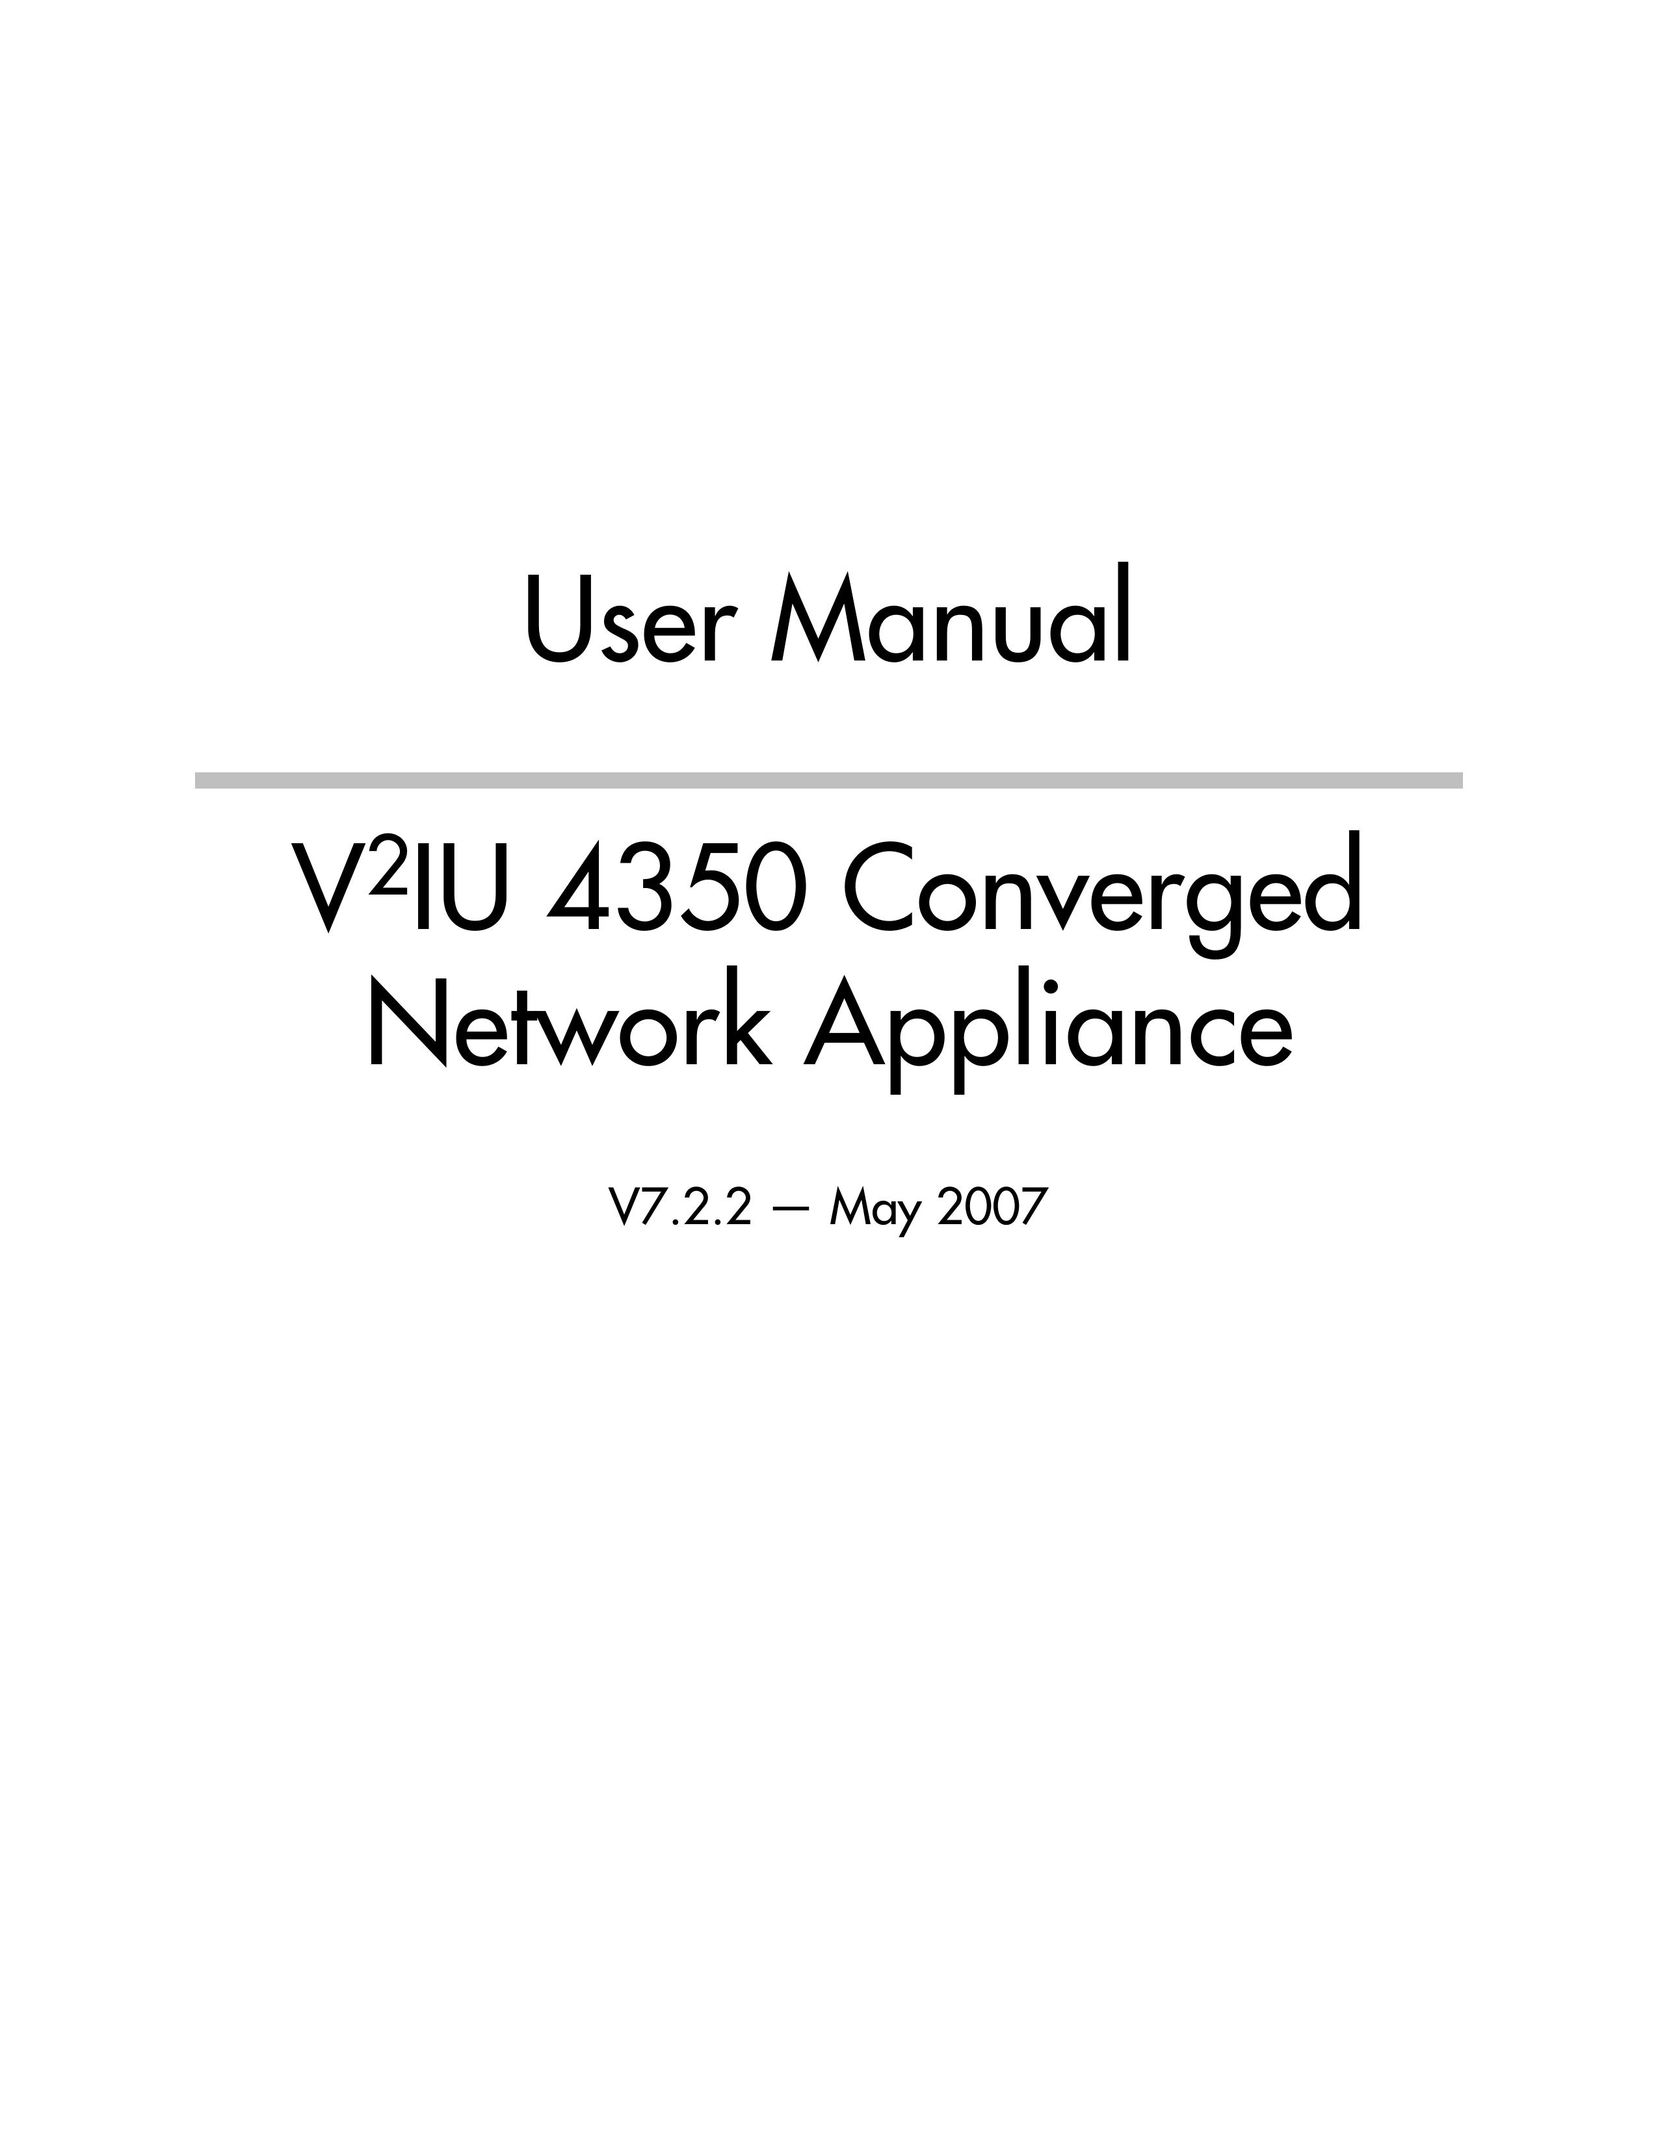 Polycom V2IU 4350 Musical Table User Manual